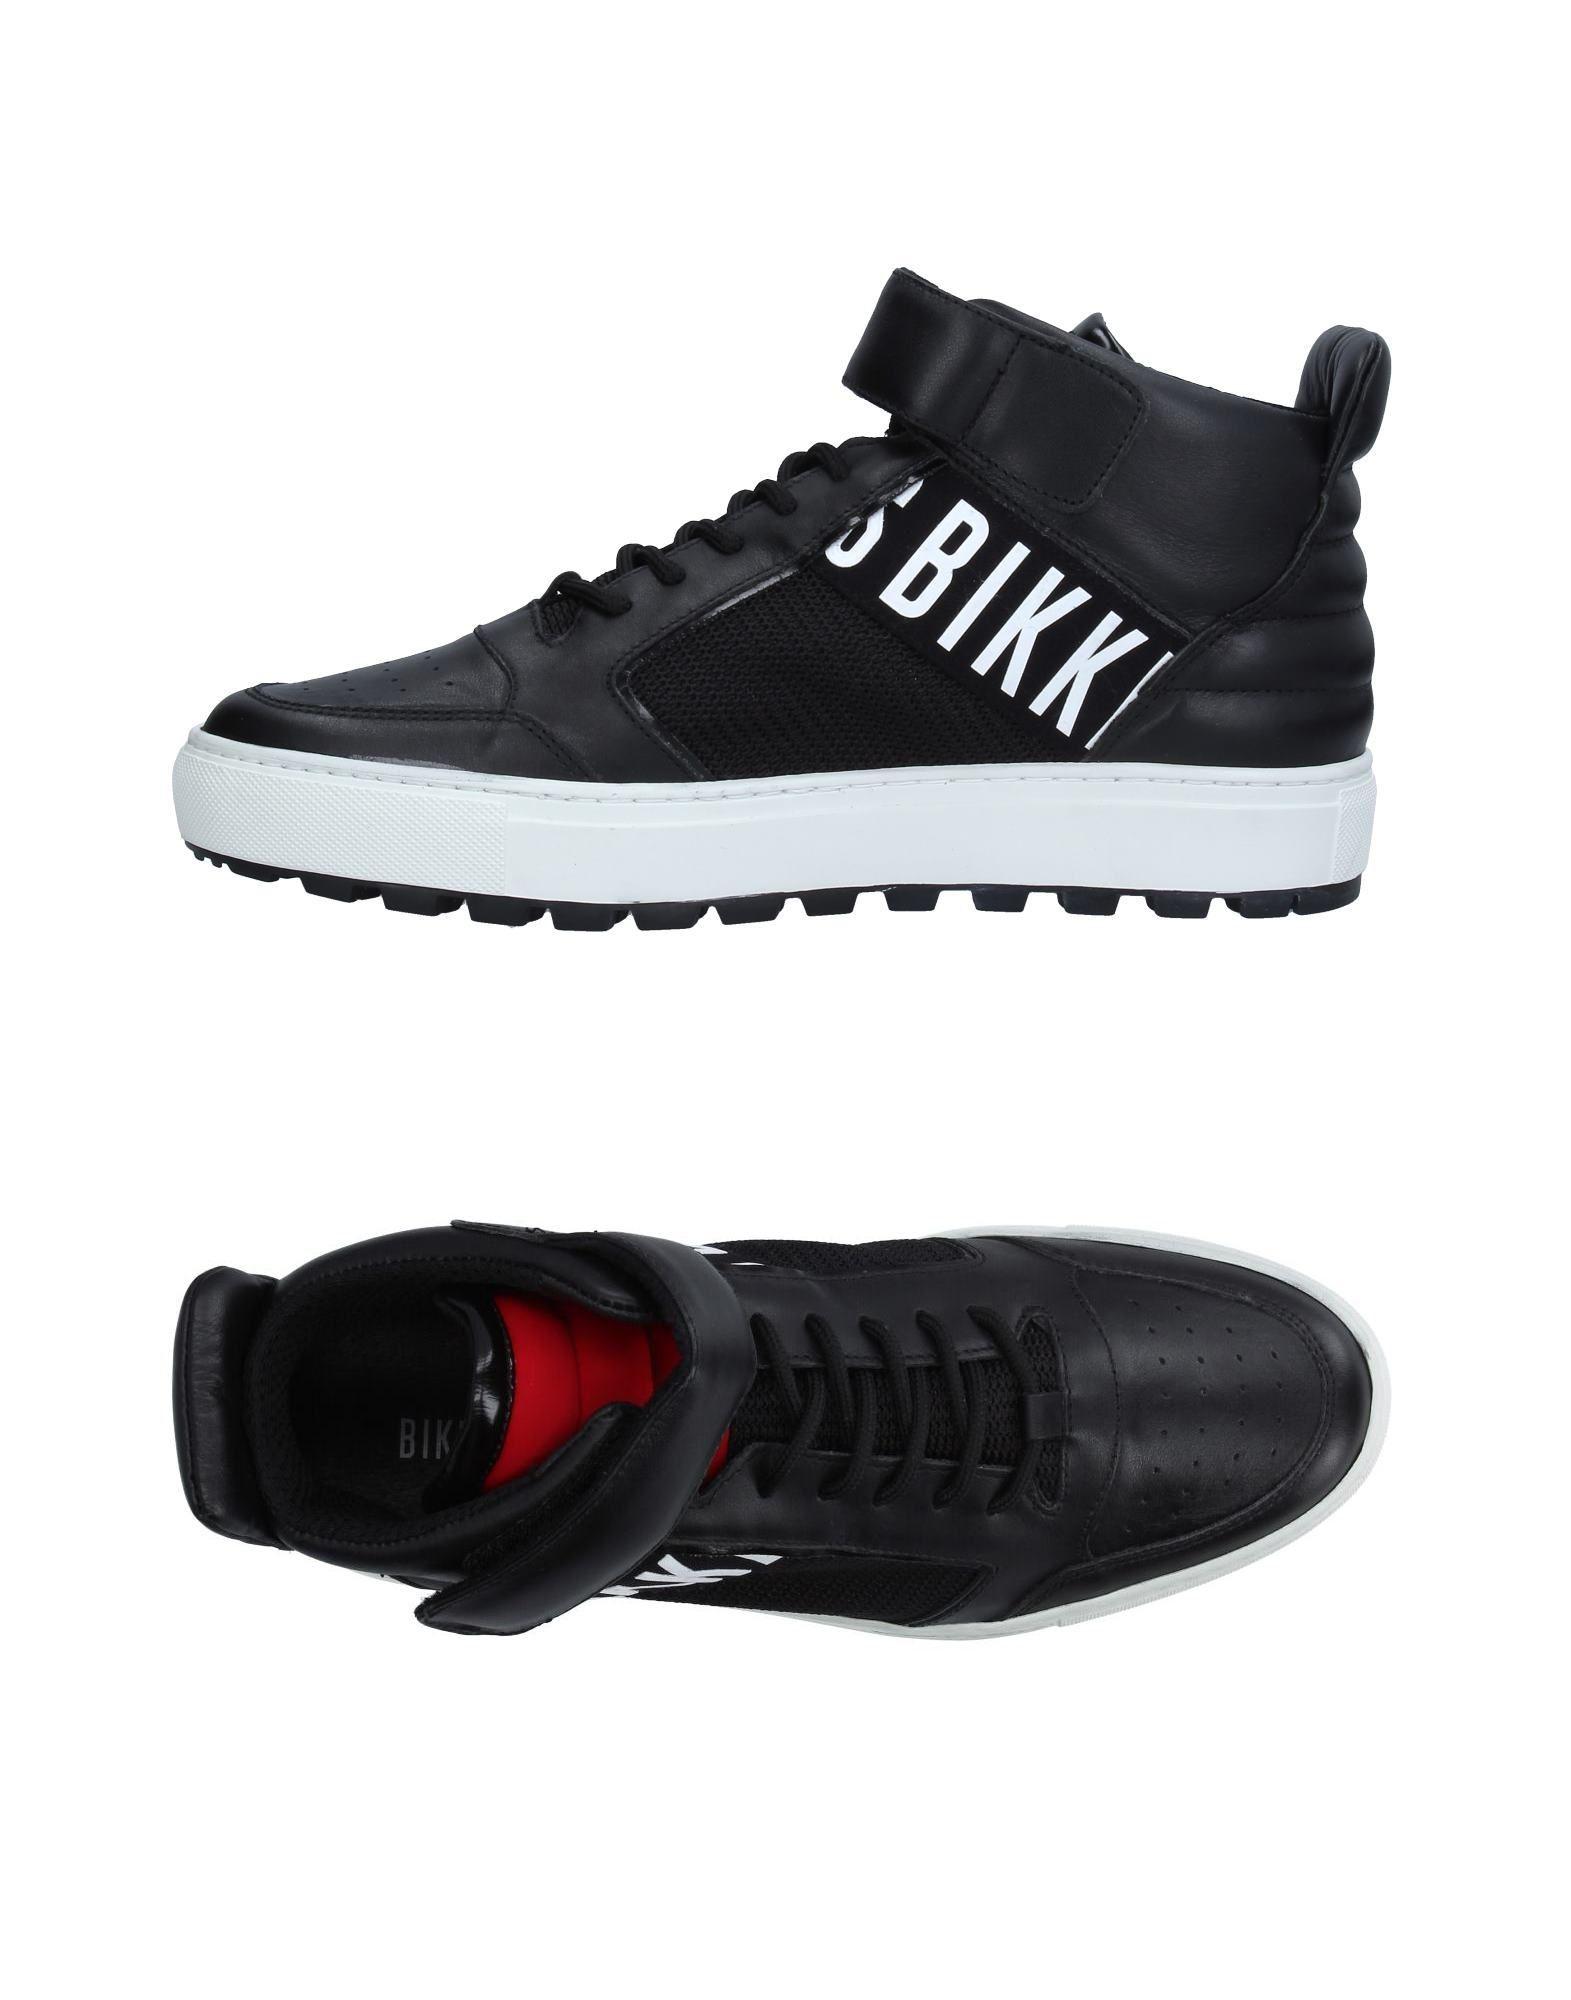 Lyst - Bikkembergs High-tops & Sneakers in Black for Men